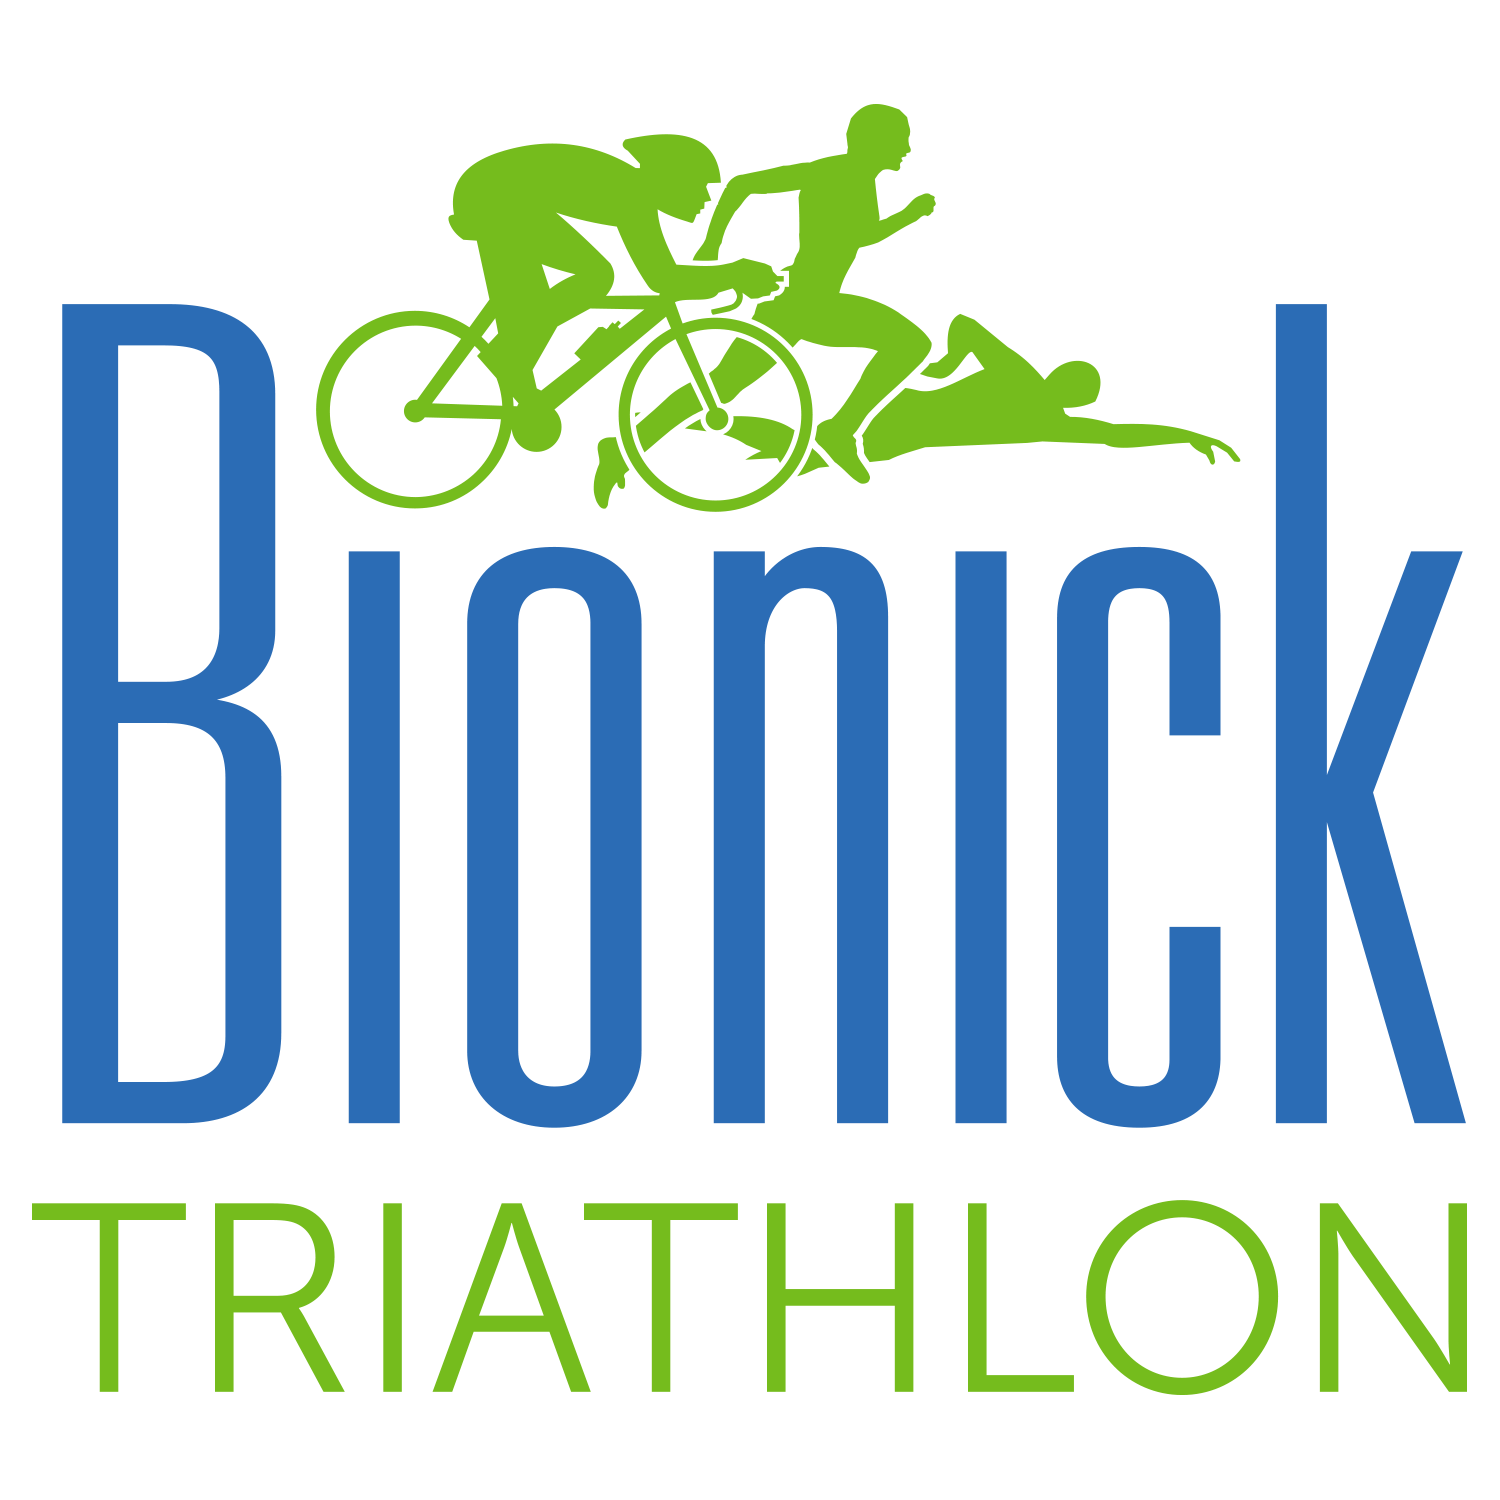 Bionick Triathlon